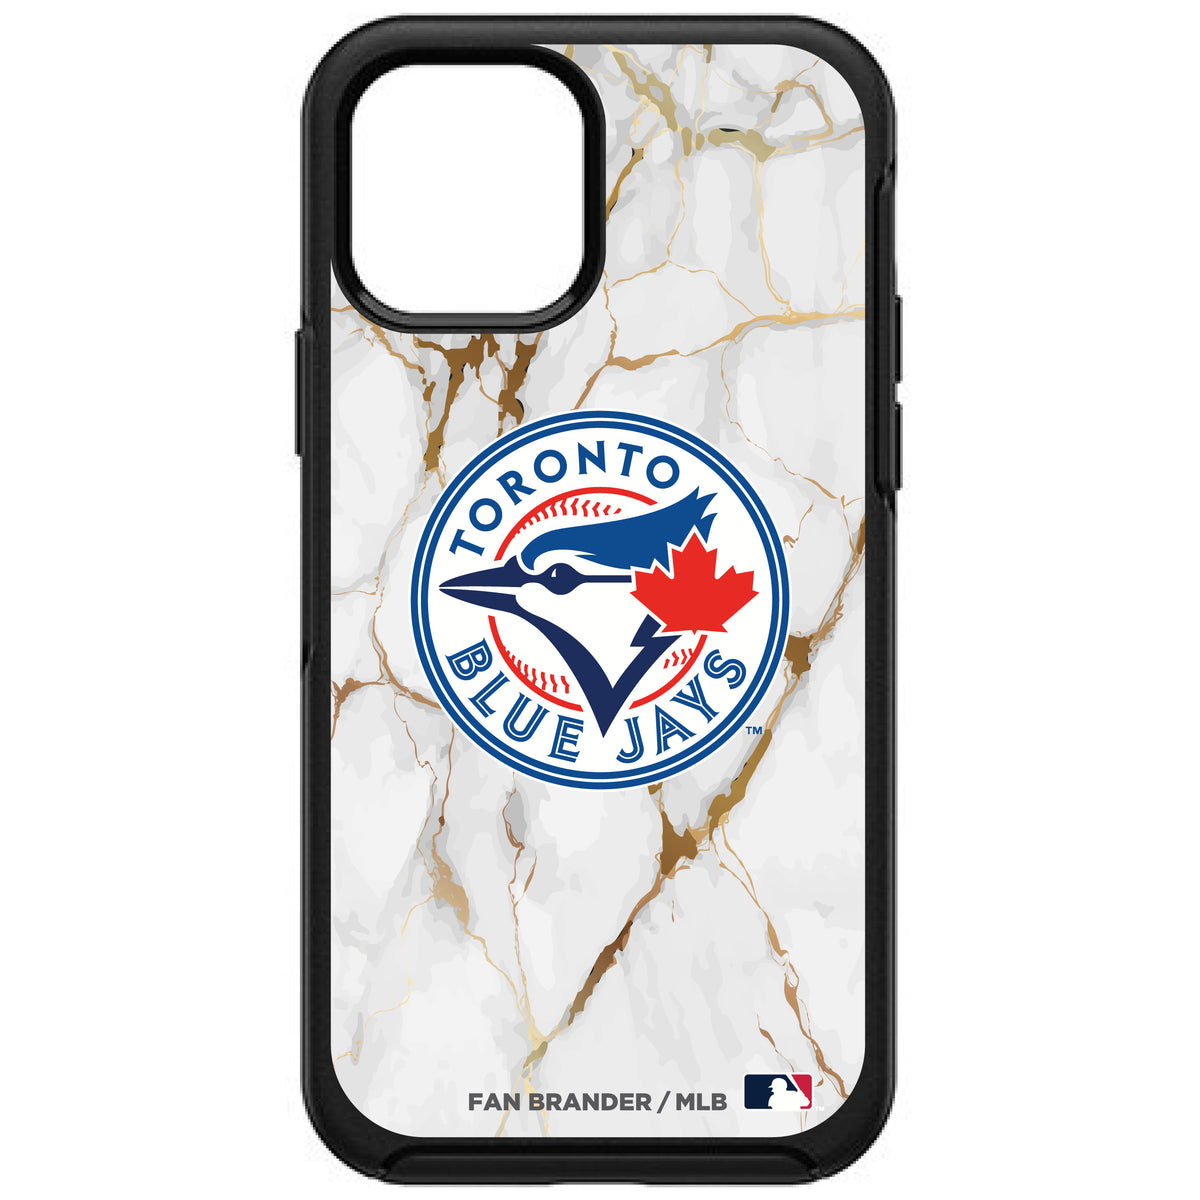 TORONTO BLUE JAYS MLB LOGO iPhone 12 Mini Case Cover